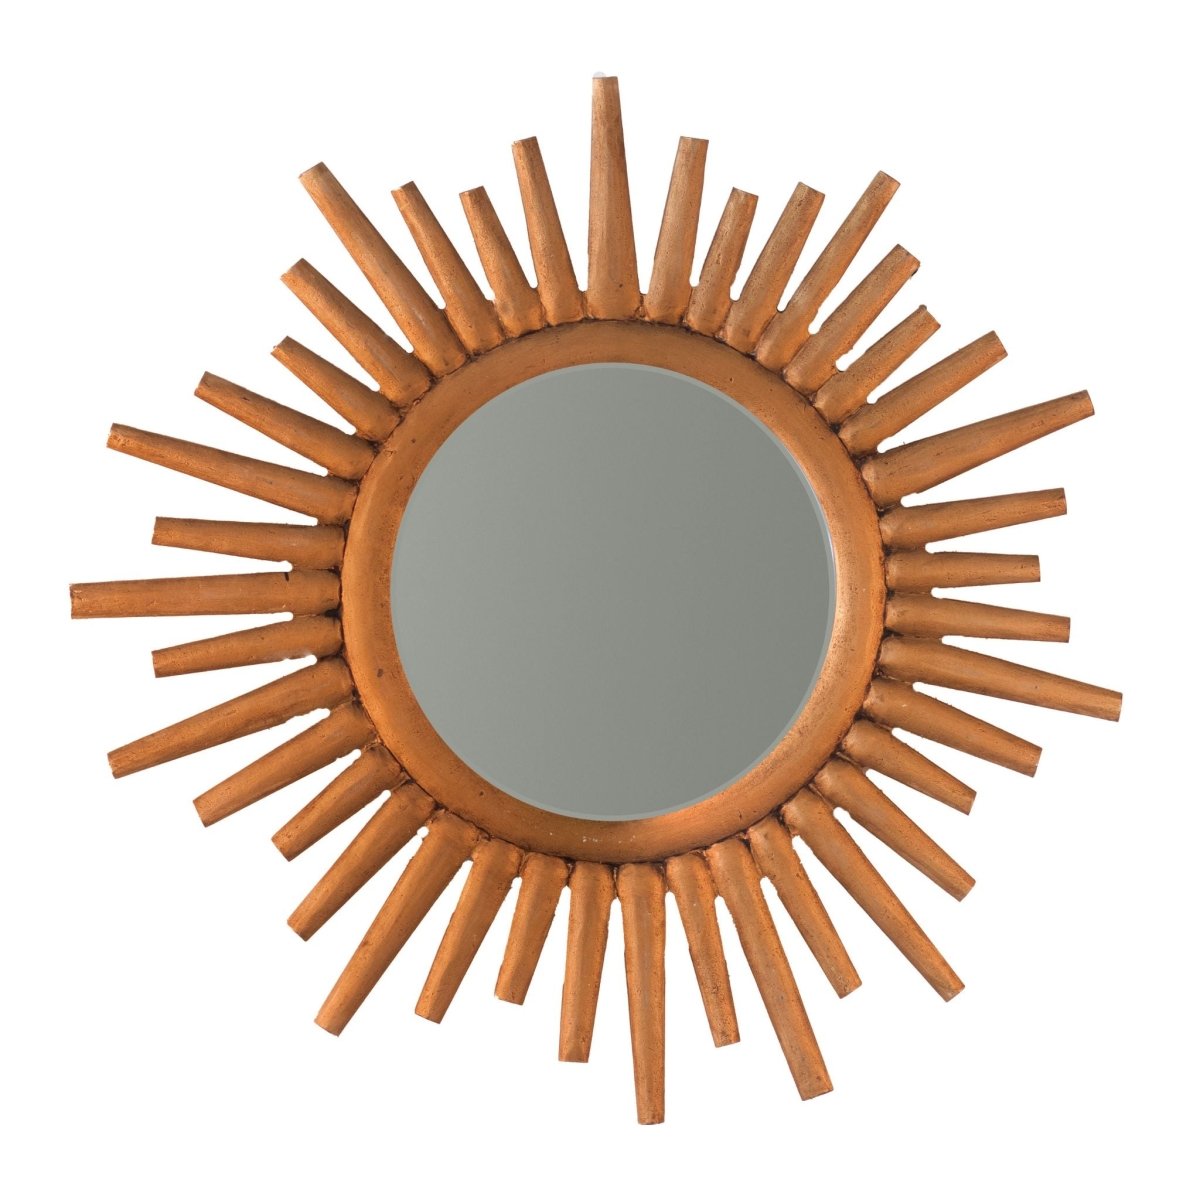 Kezevel Wooden Wall Hanging Mirror - Round Matt Golden Handcarved Decorative Mirrors for Living Room, Wall Showpiece